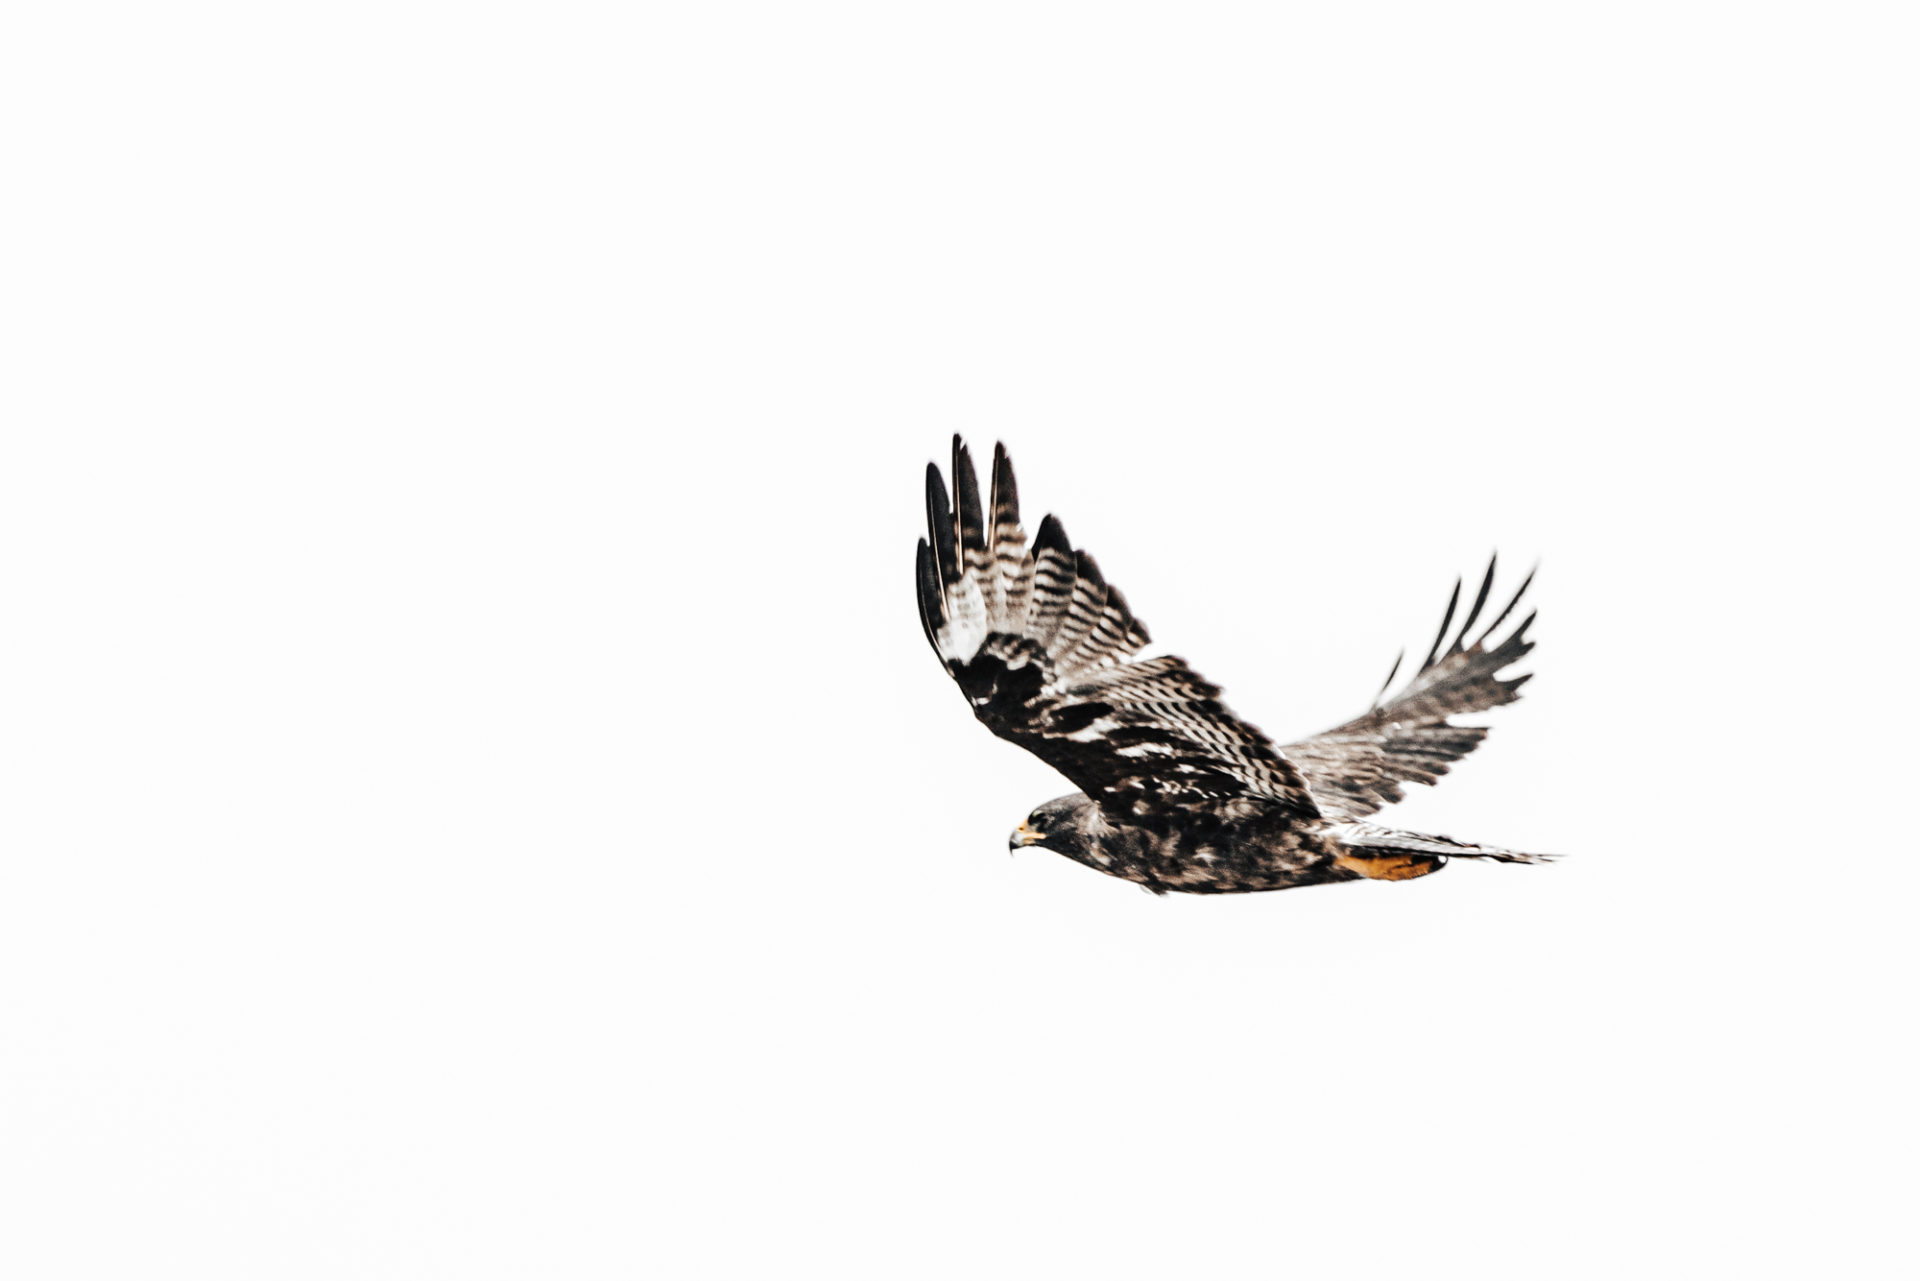 A Galapagos hawk in flight